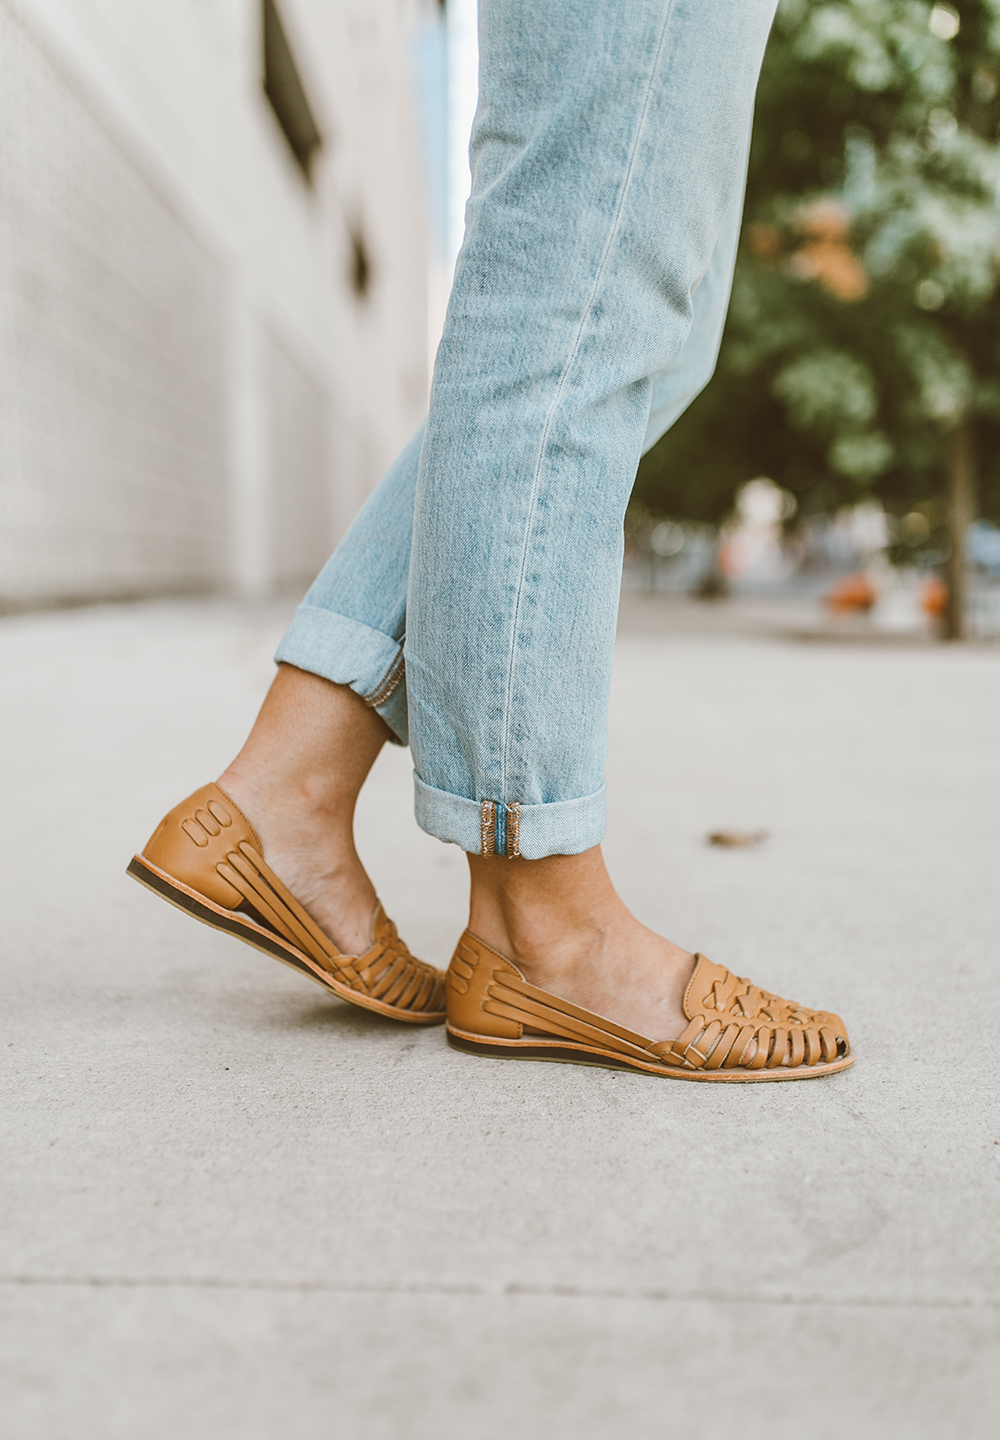 livvyland-blog-olivia-watson-austin-texas-fashion-style-blog-nisolo-ecuador-huarche-sandals-almond-tee-jeans-outfit-4